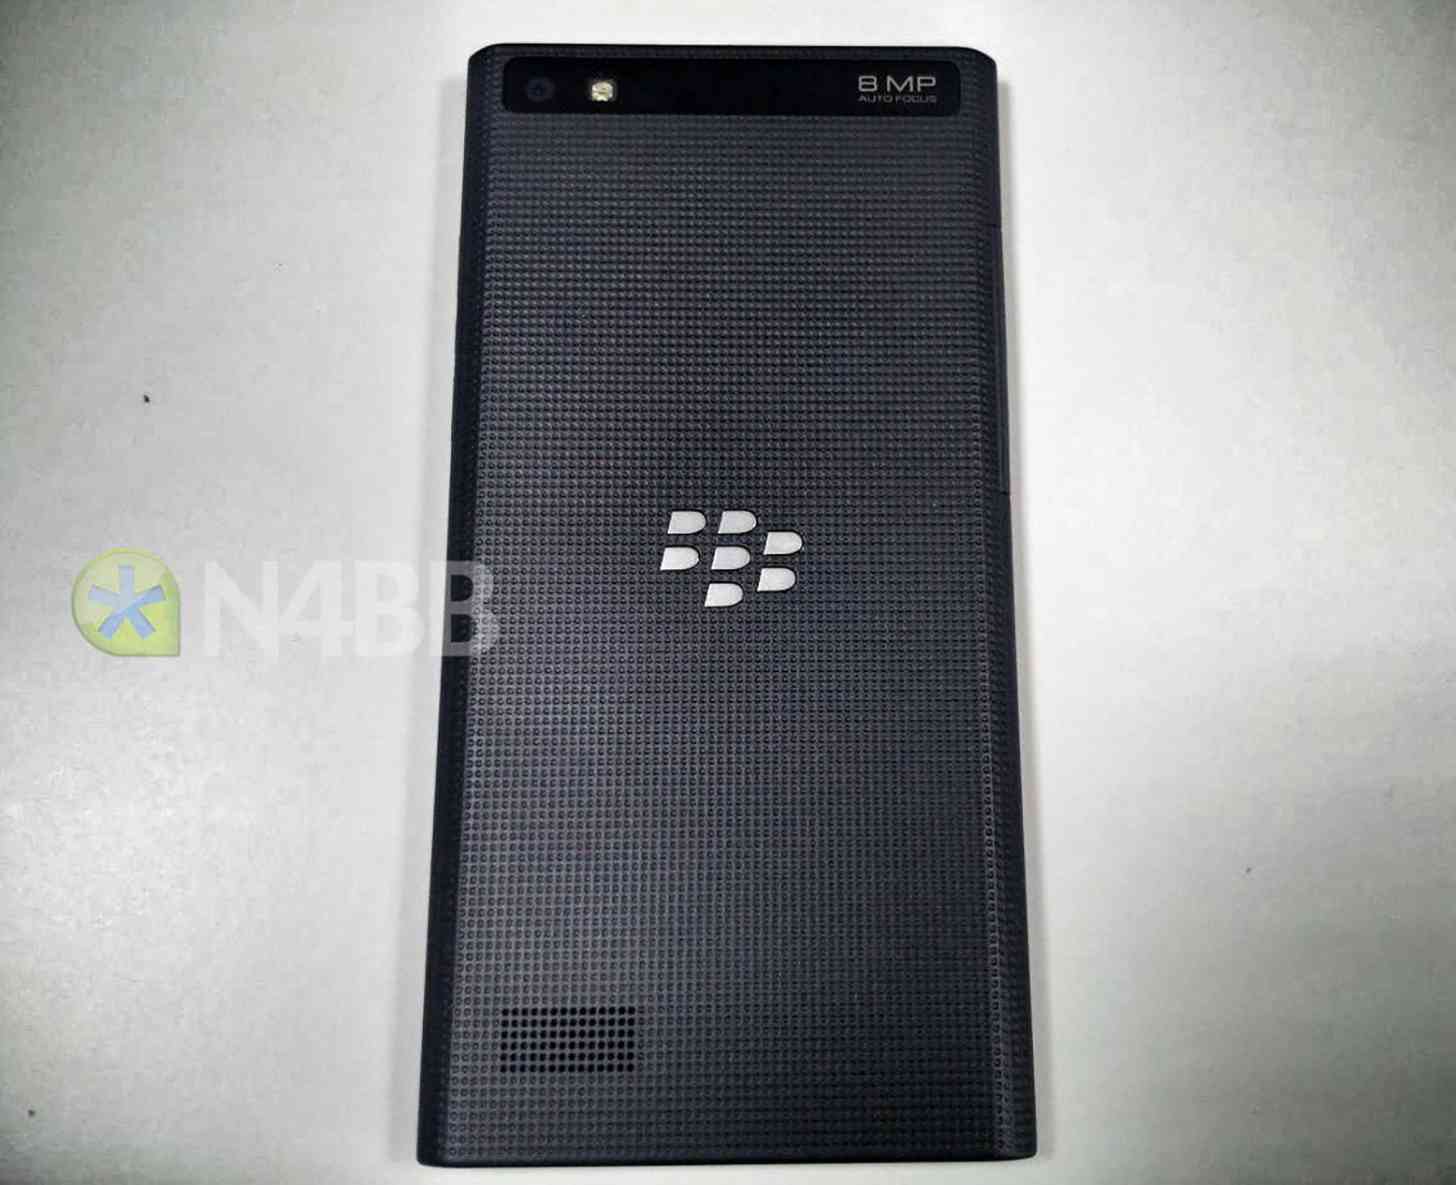 BlackBerry Rio, Leap photo leak rear large